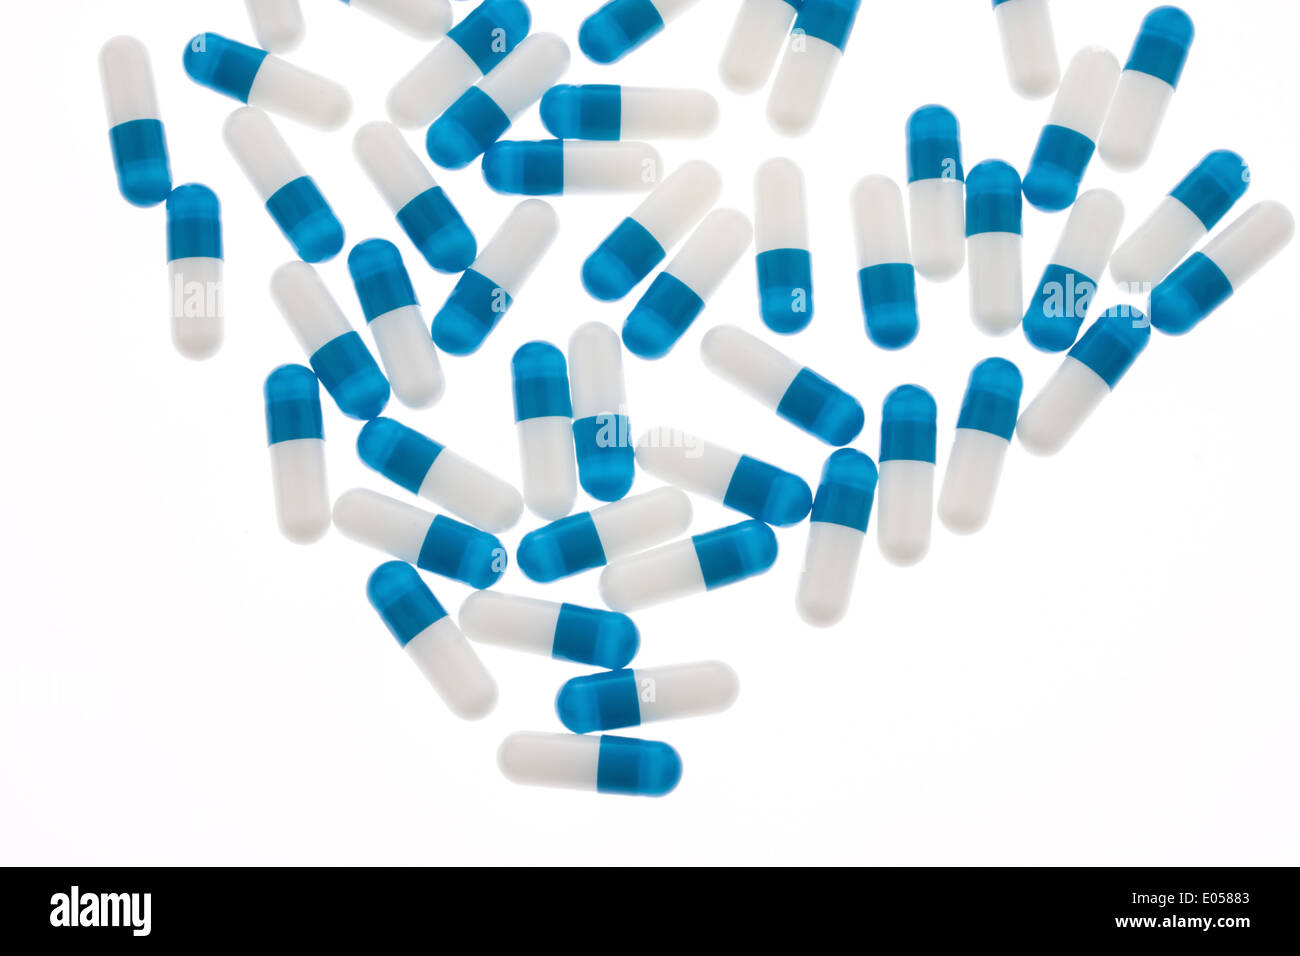 Baluweisse tablets capsules of a painkiller, Baluweisse Tabletten Kapseln eines Schmerzmittels Stock Photo